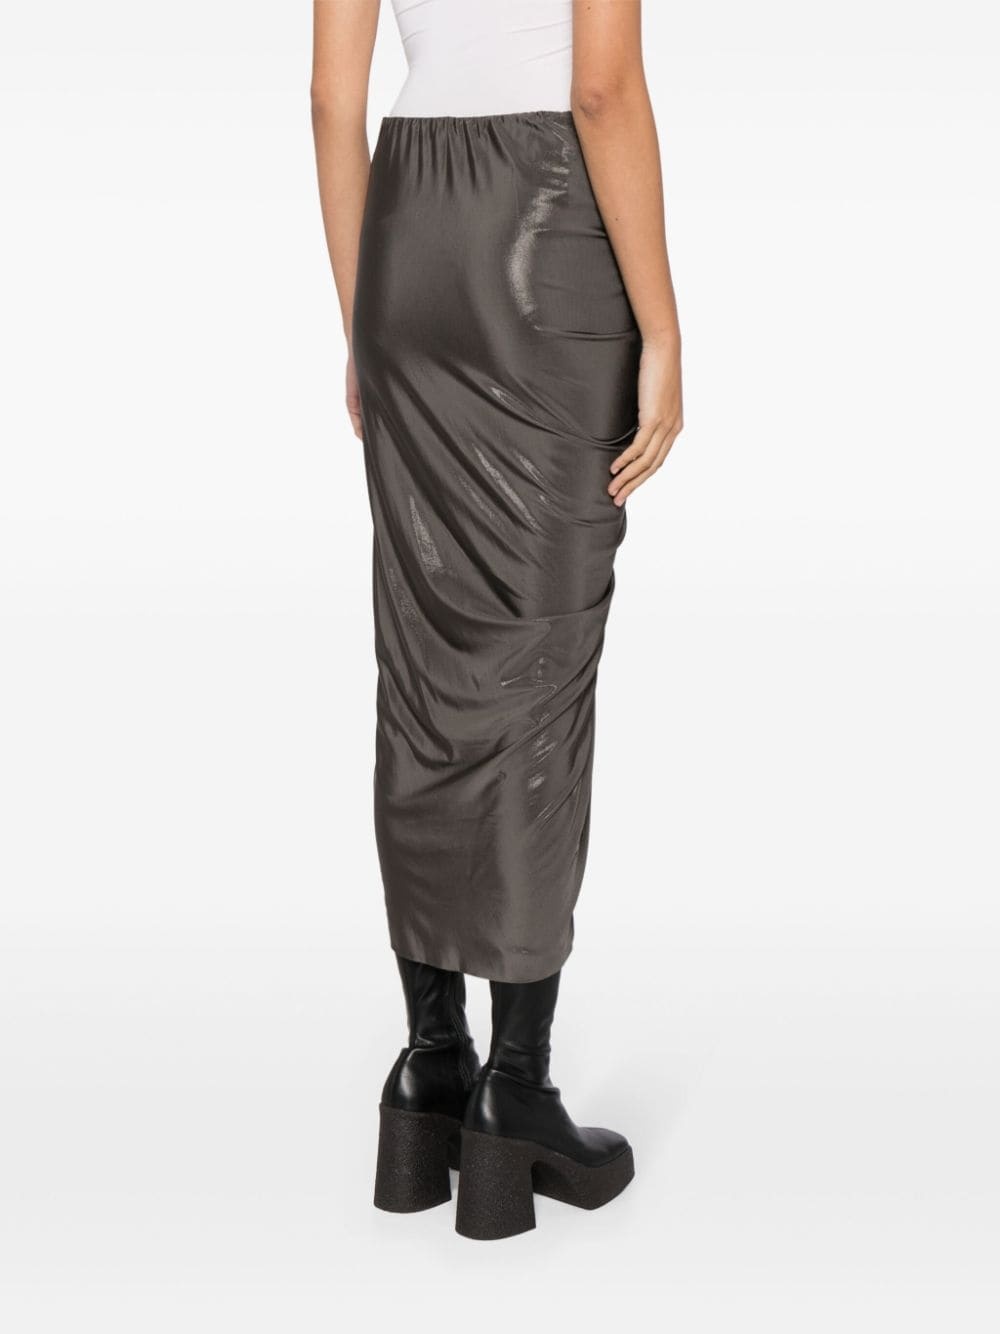 high-waisted draped skirt - 4